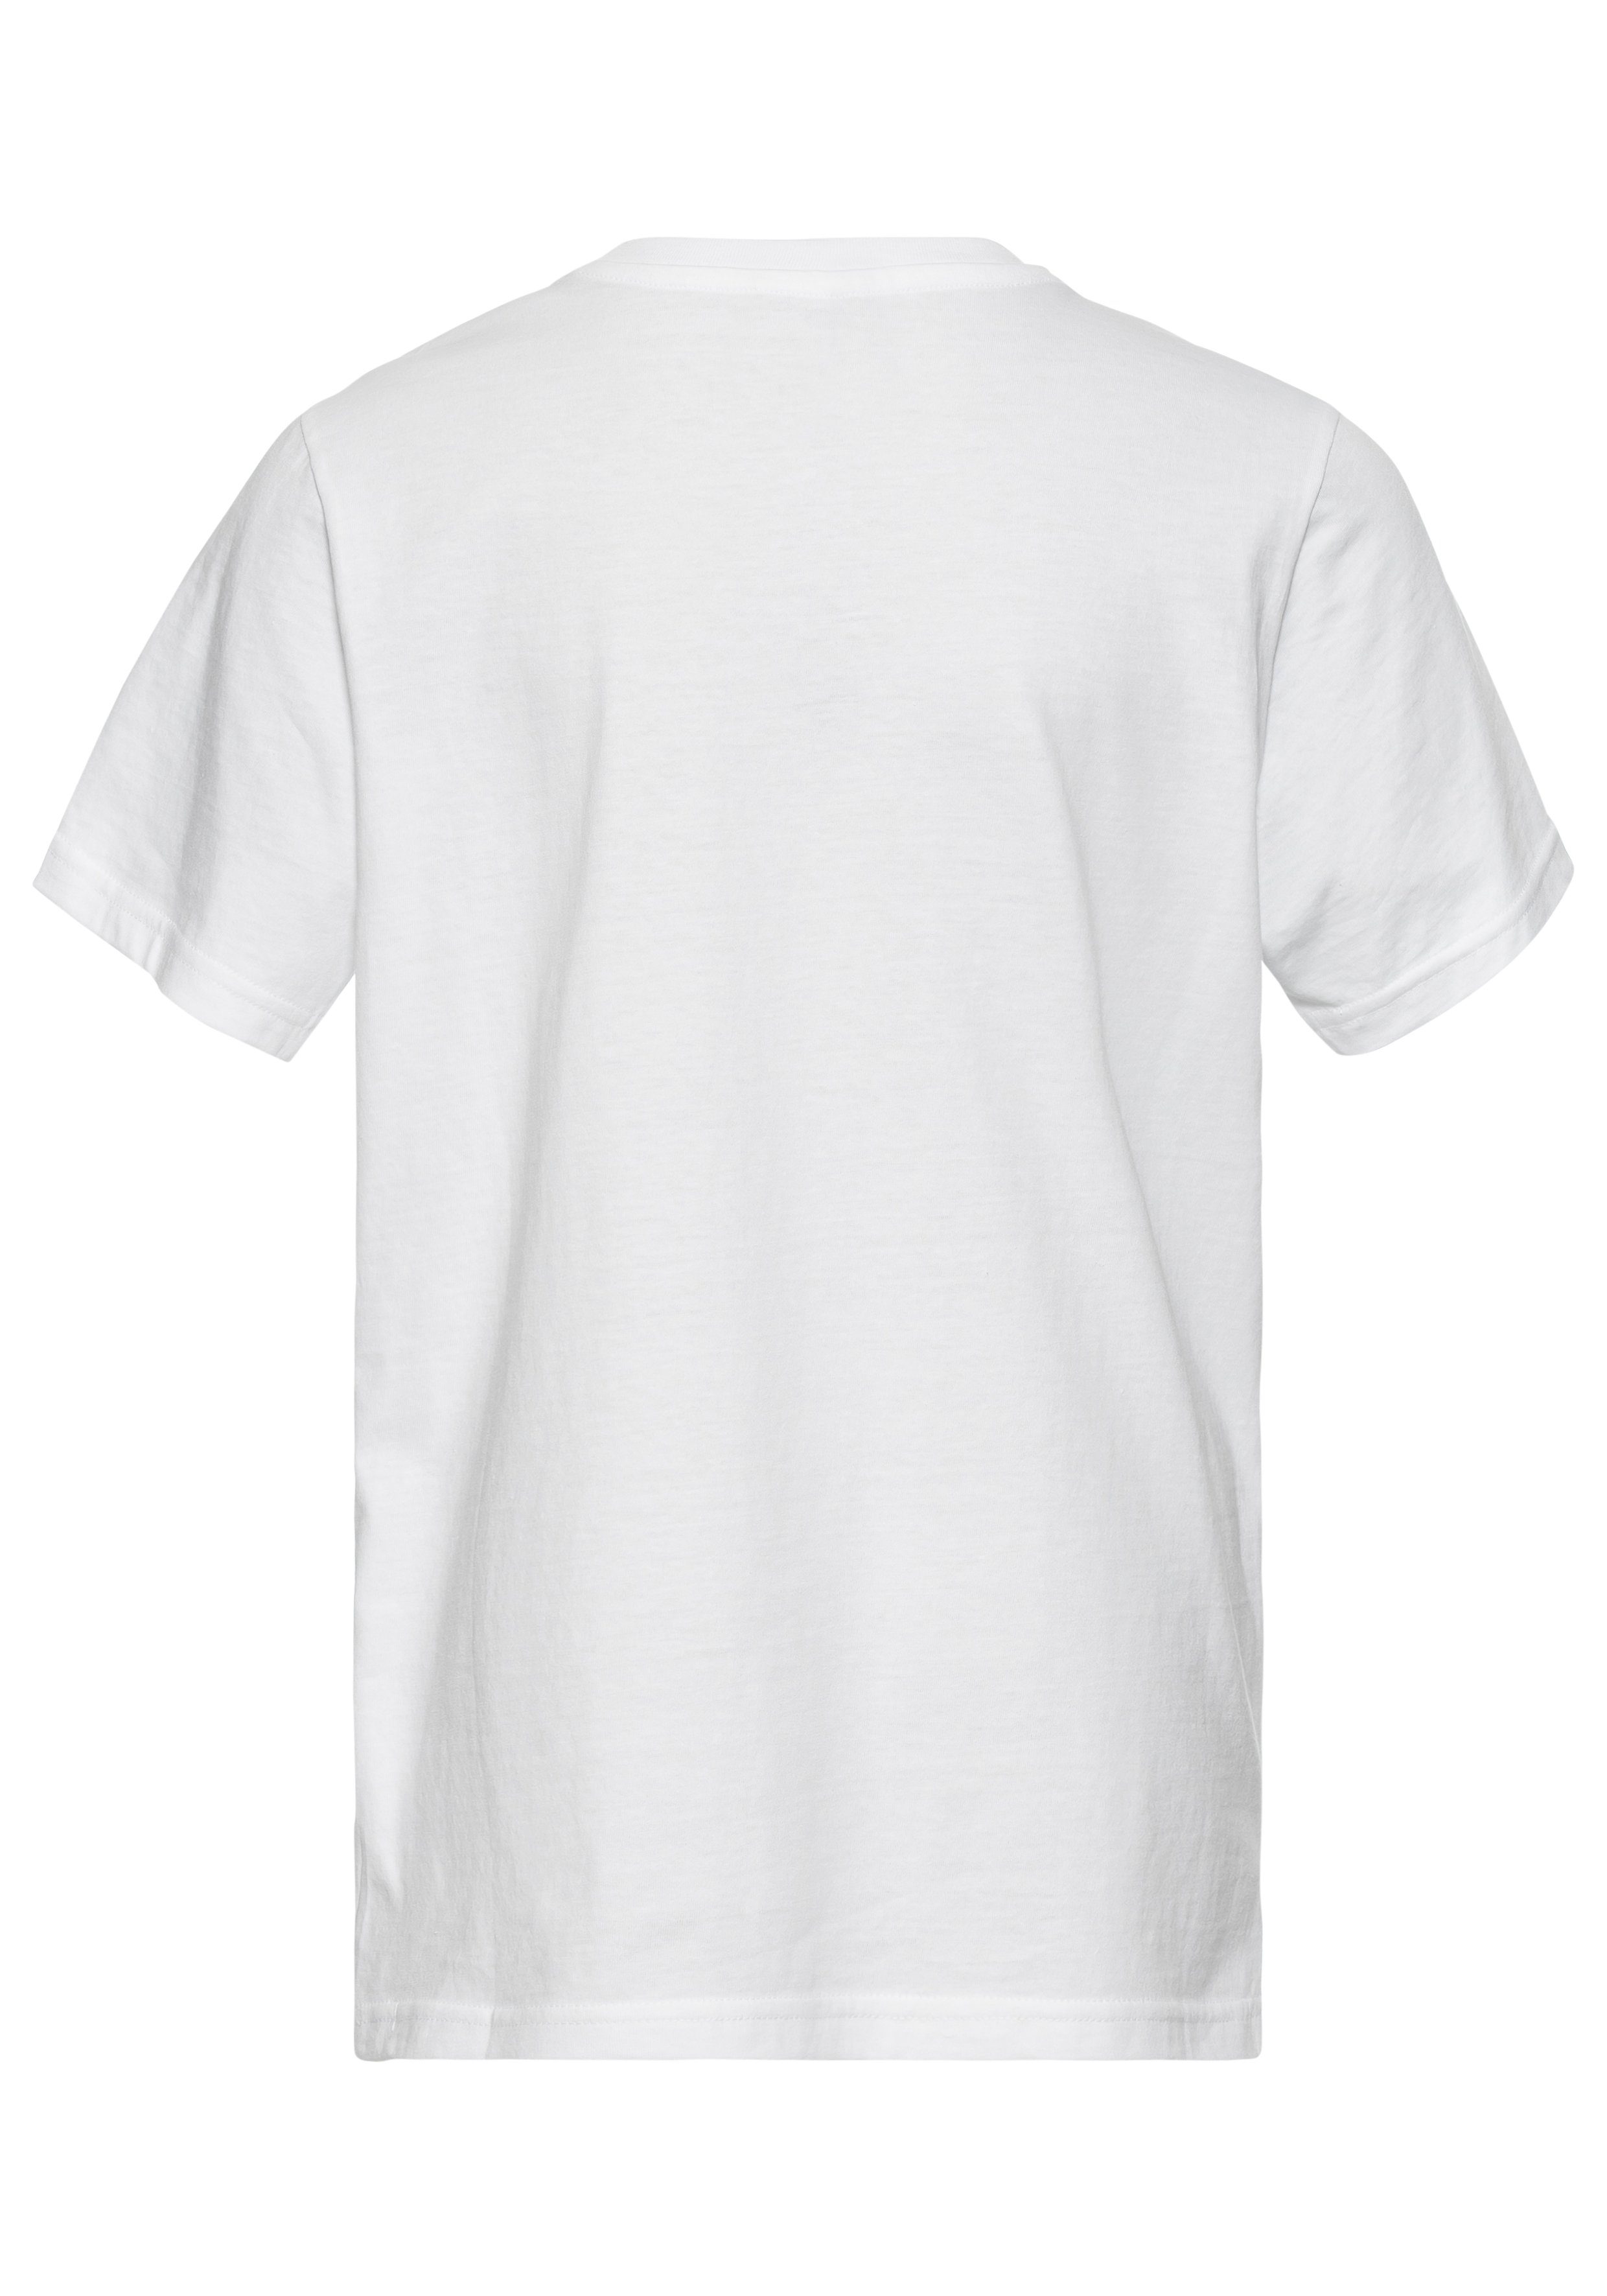 Crewneck T-Shirt Graphic Champion weiß Shop T-Shirt